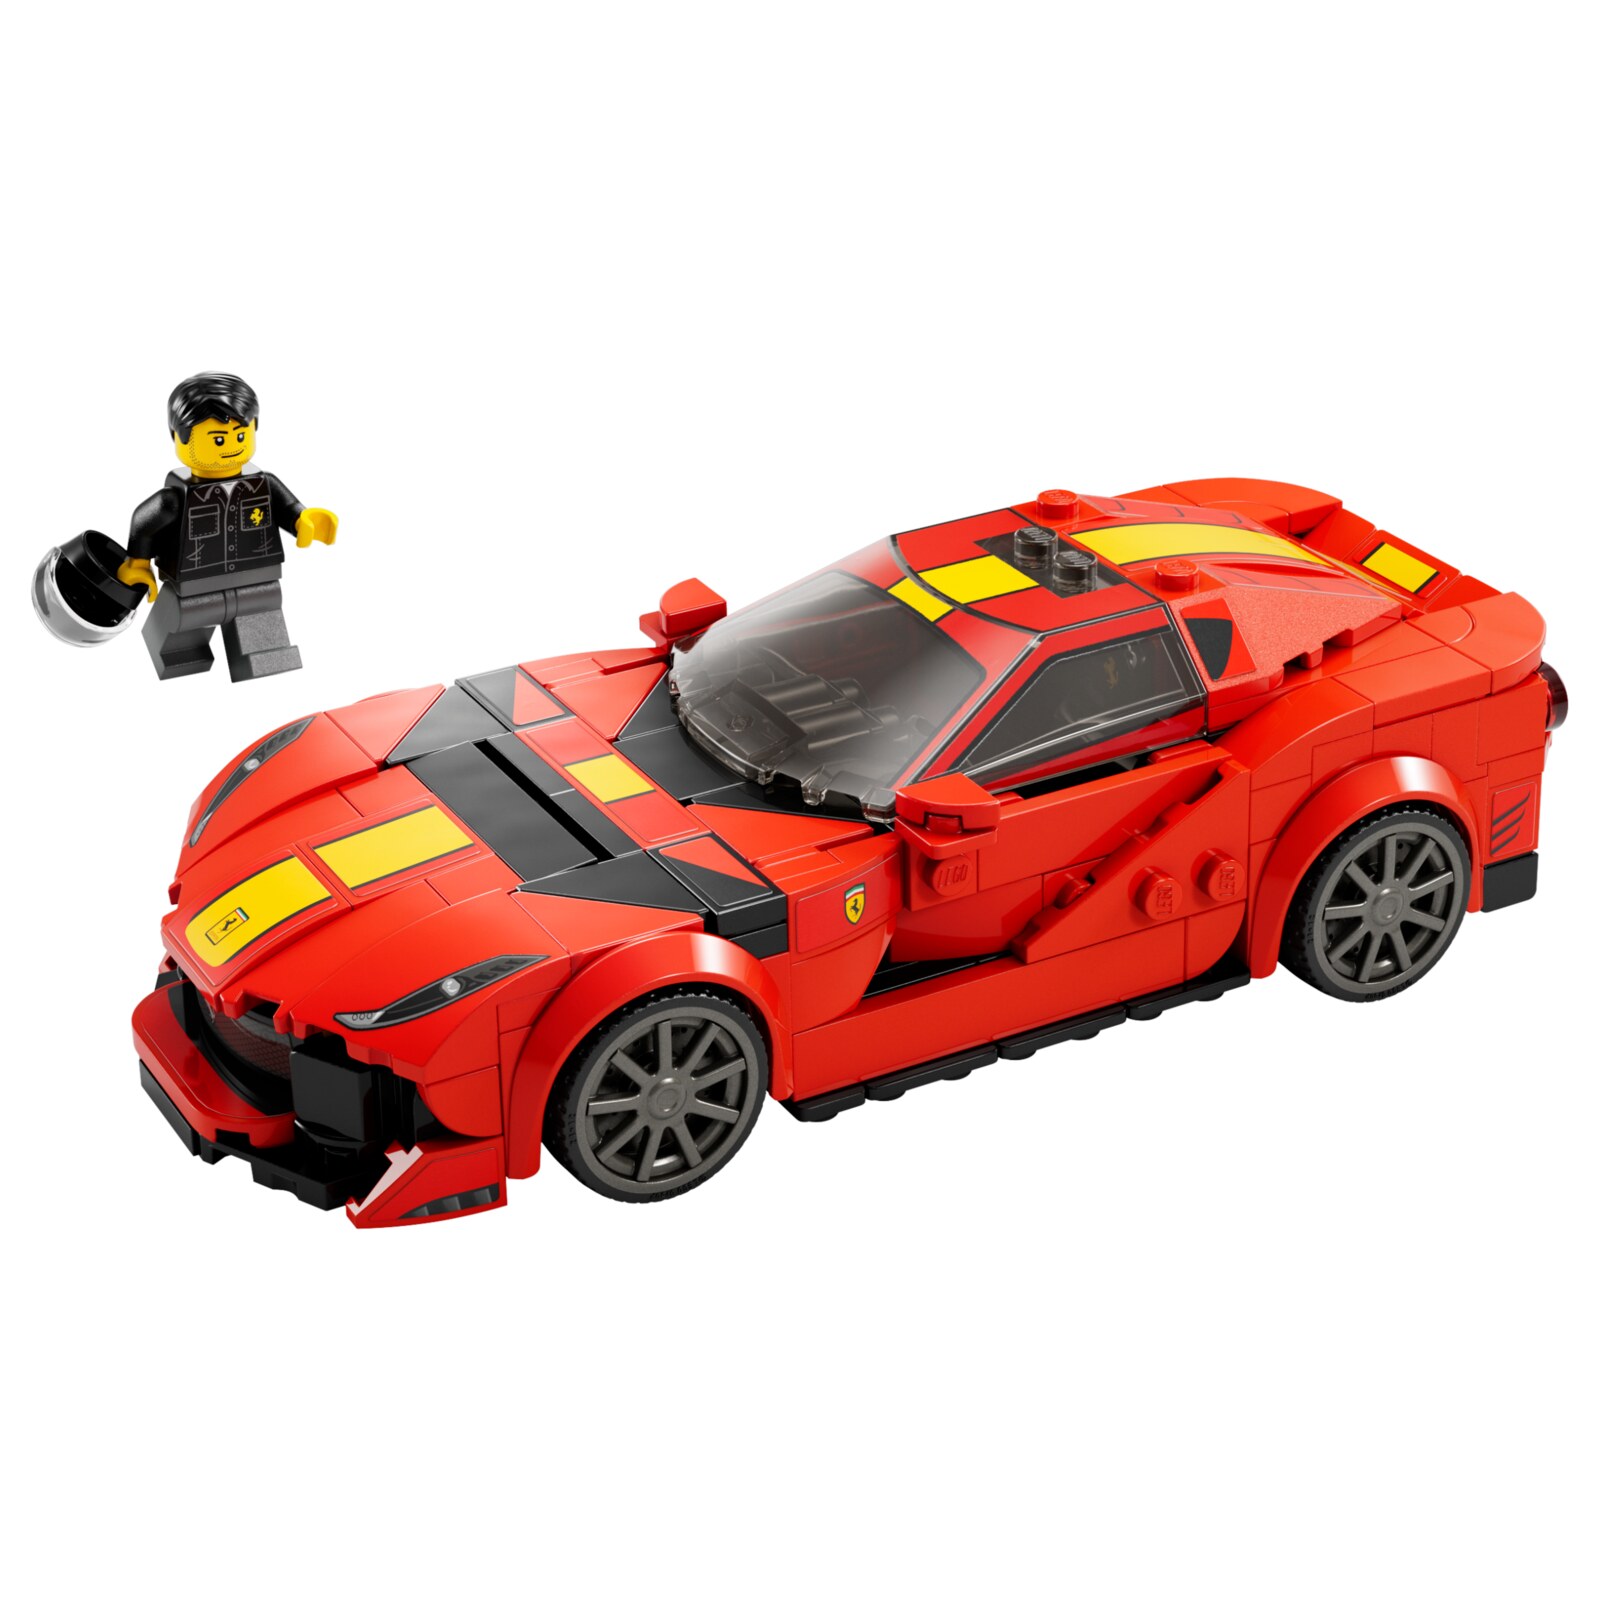 Конструктор LEGO Speed Champions Ferrari 812 Competizione, 261 деталь, 76914 конструктор lego 42125 ferrari 488 gte “af corse 51”